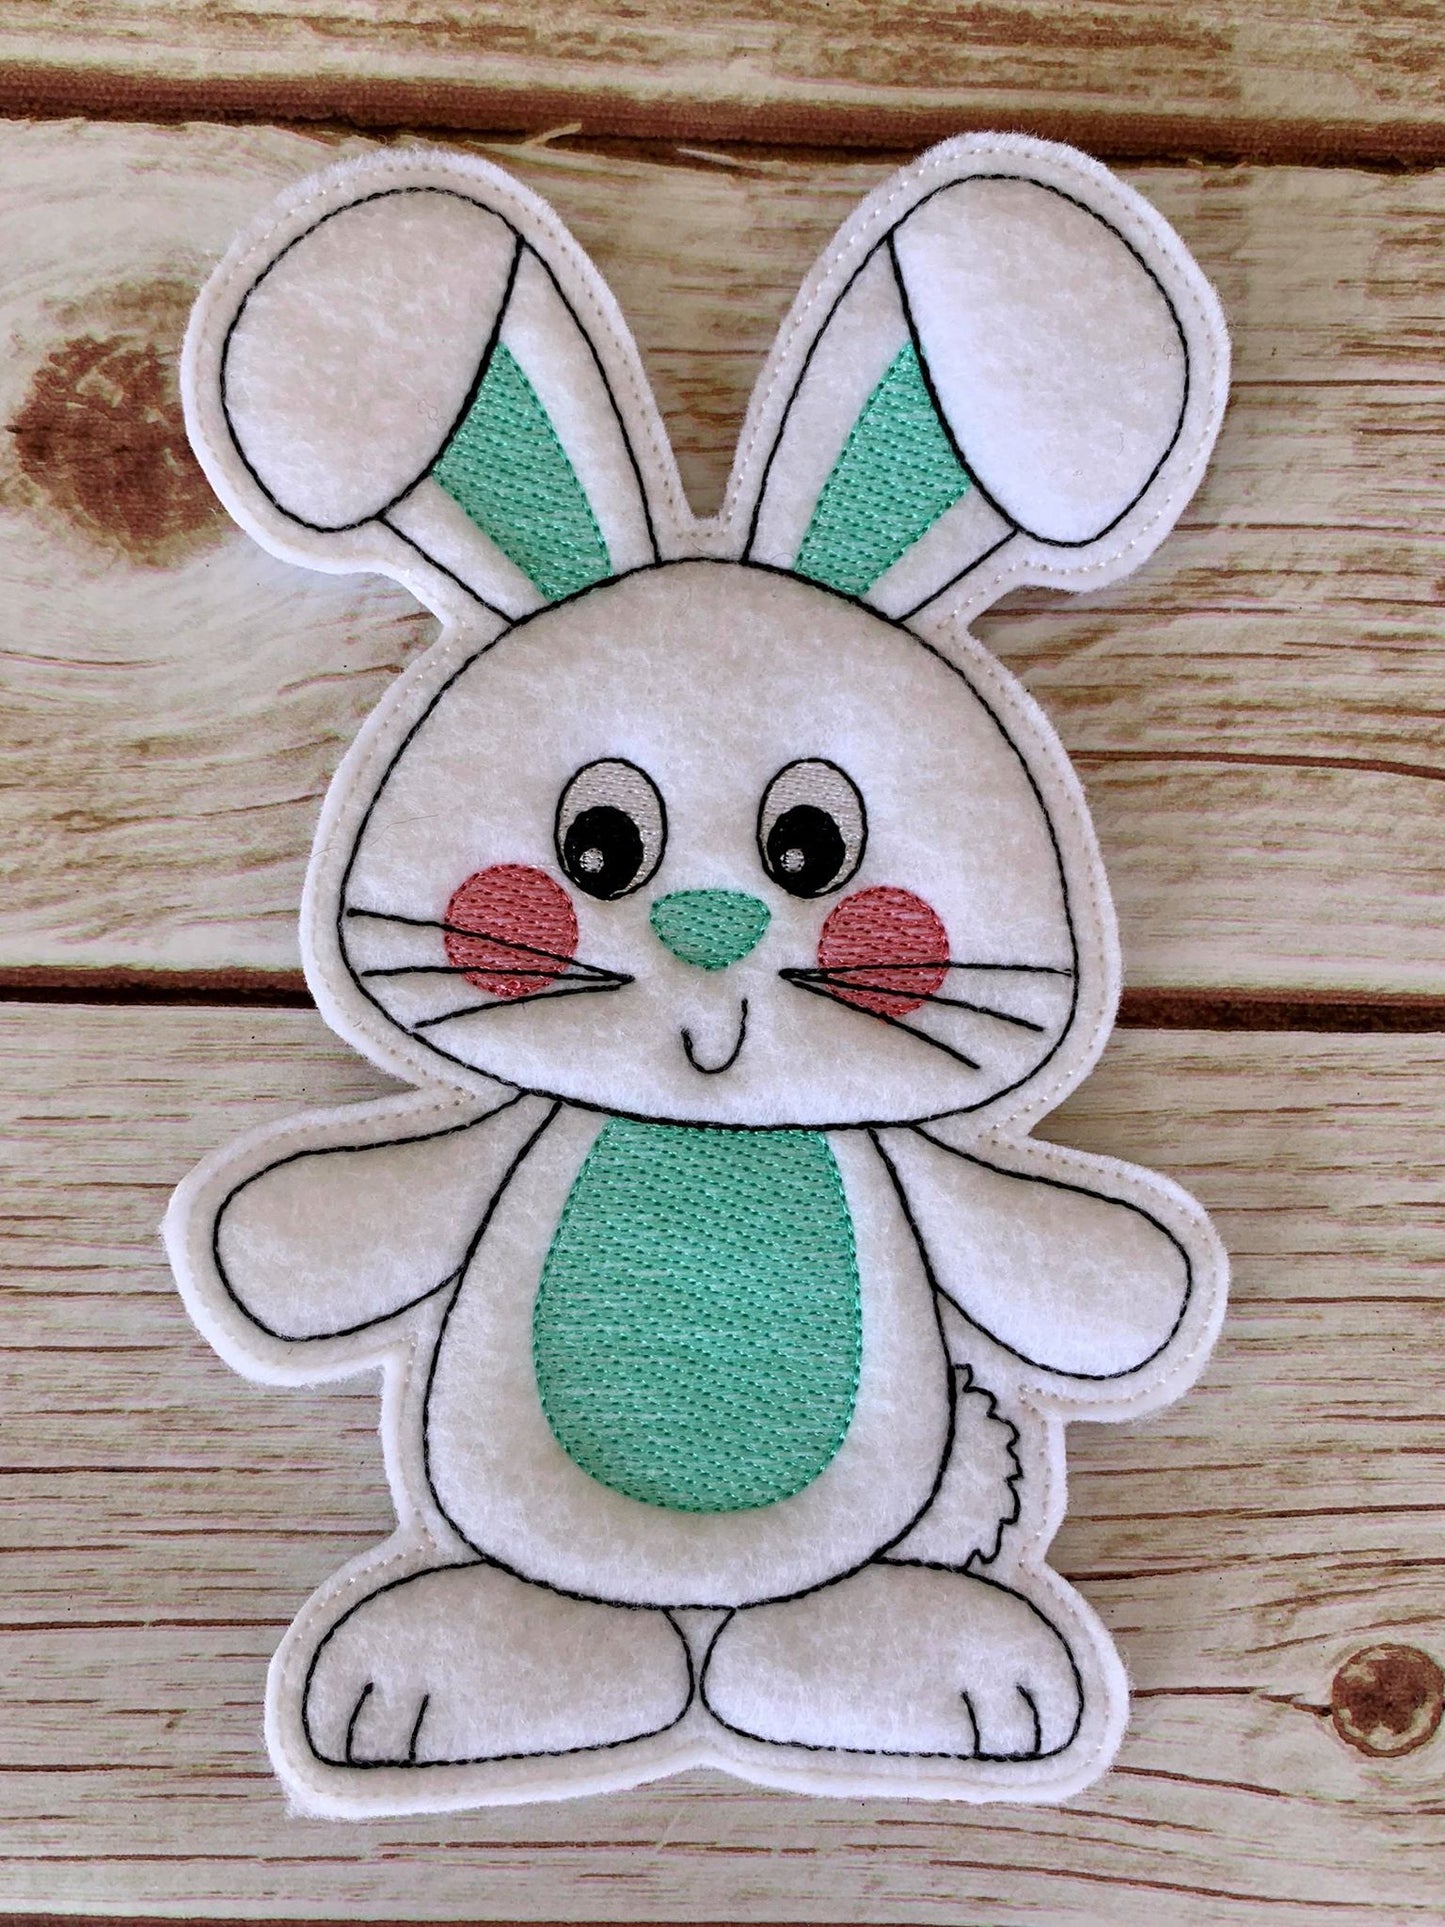 Happy Bunny Felties - 5 sizes - Digital Embroidery Design